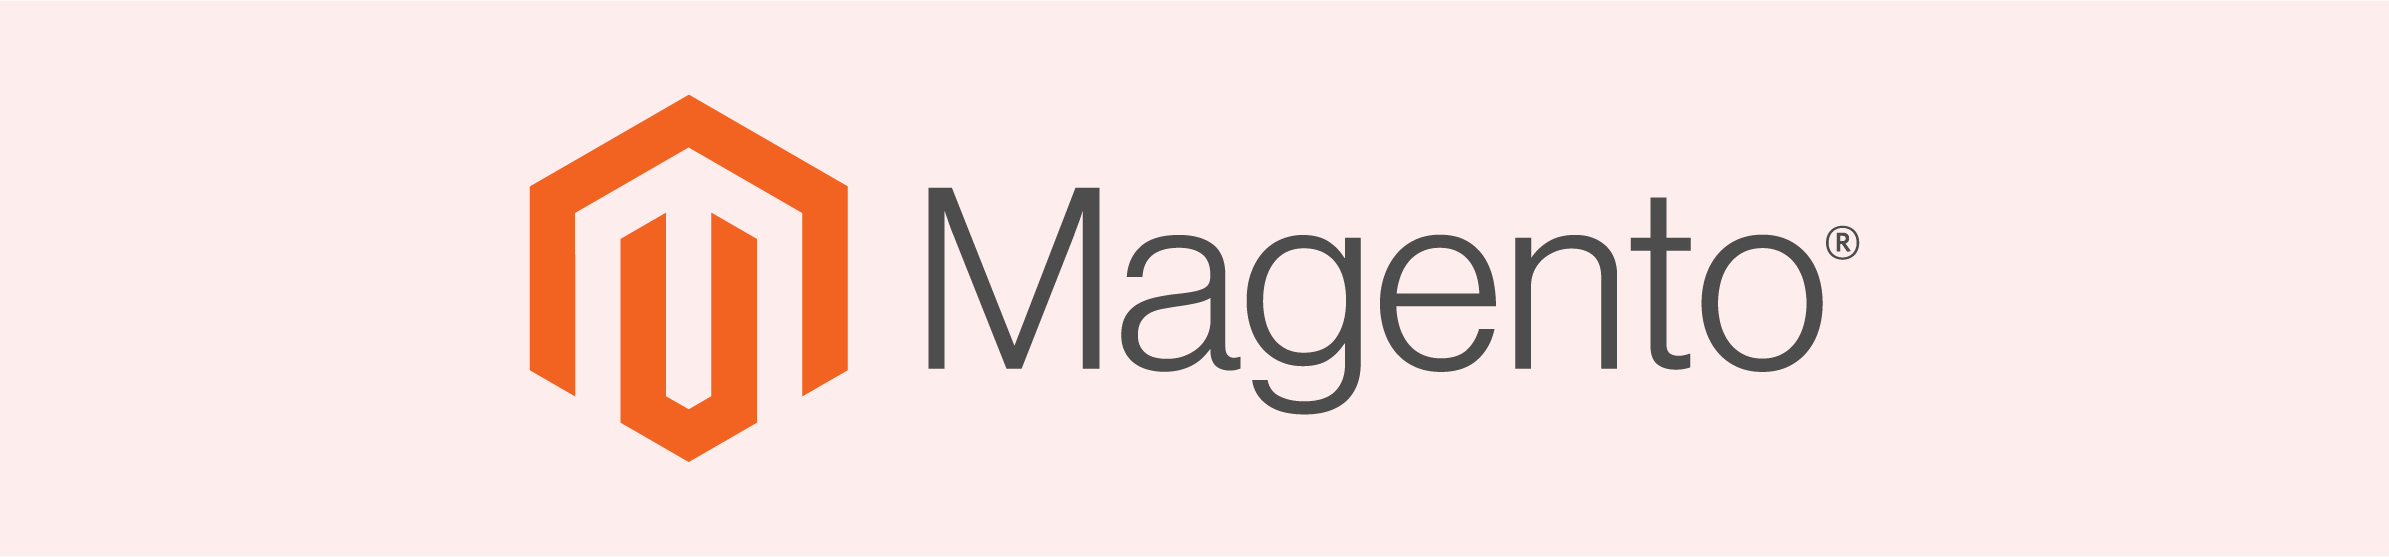 Magento's evolution from 2008 to version 2.4.6, highlighting key milestones